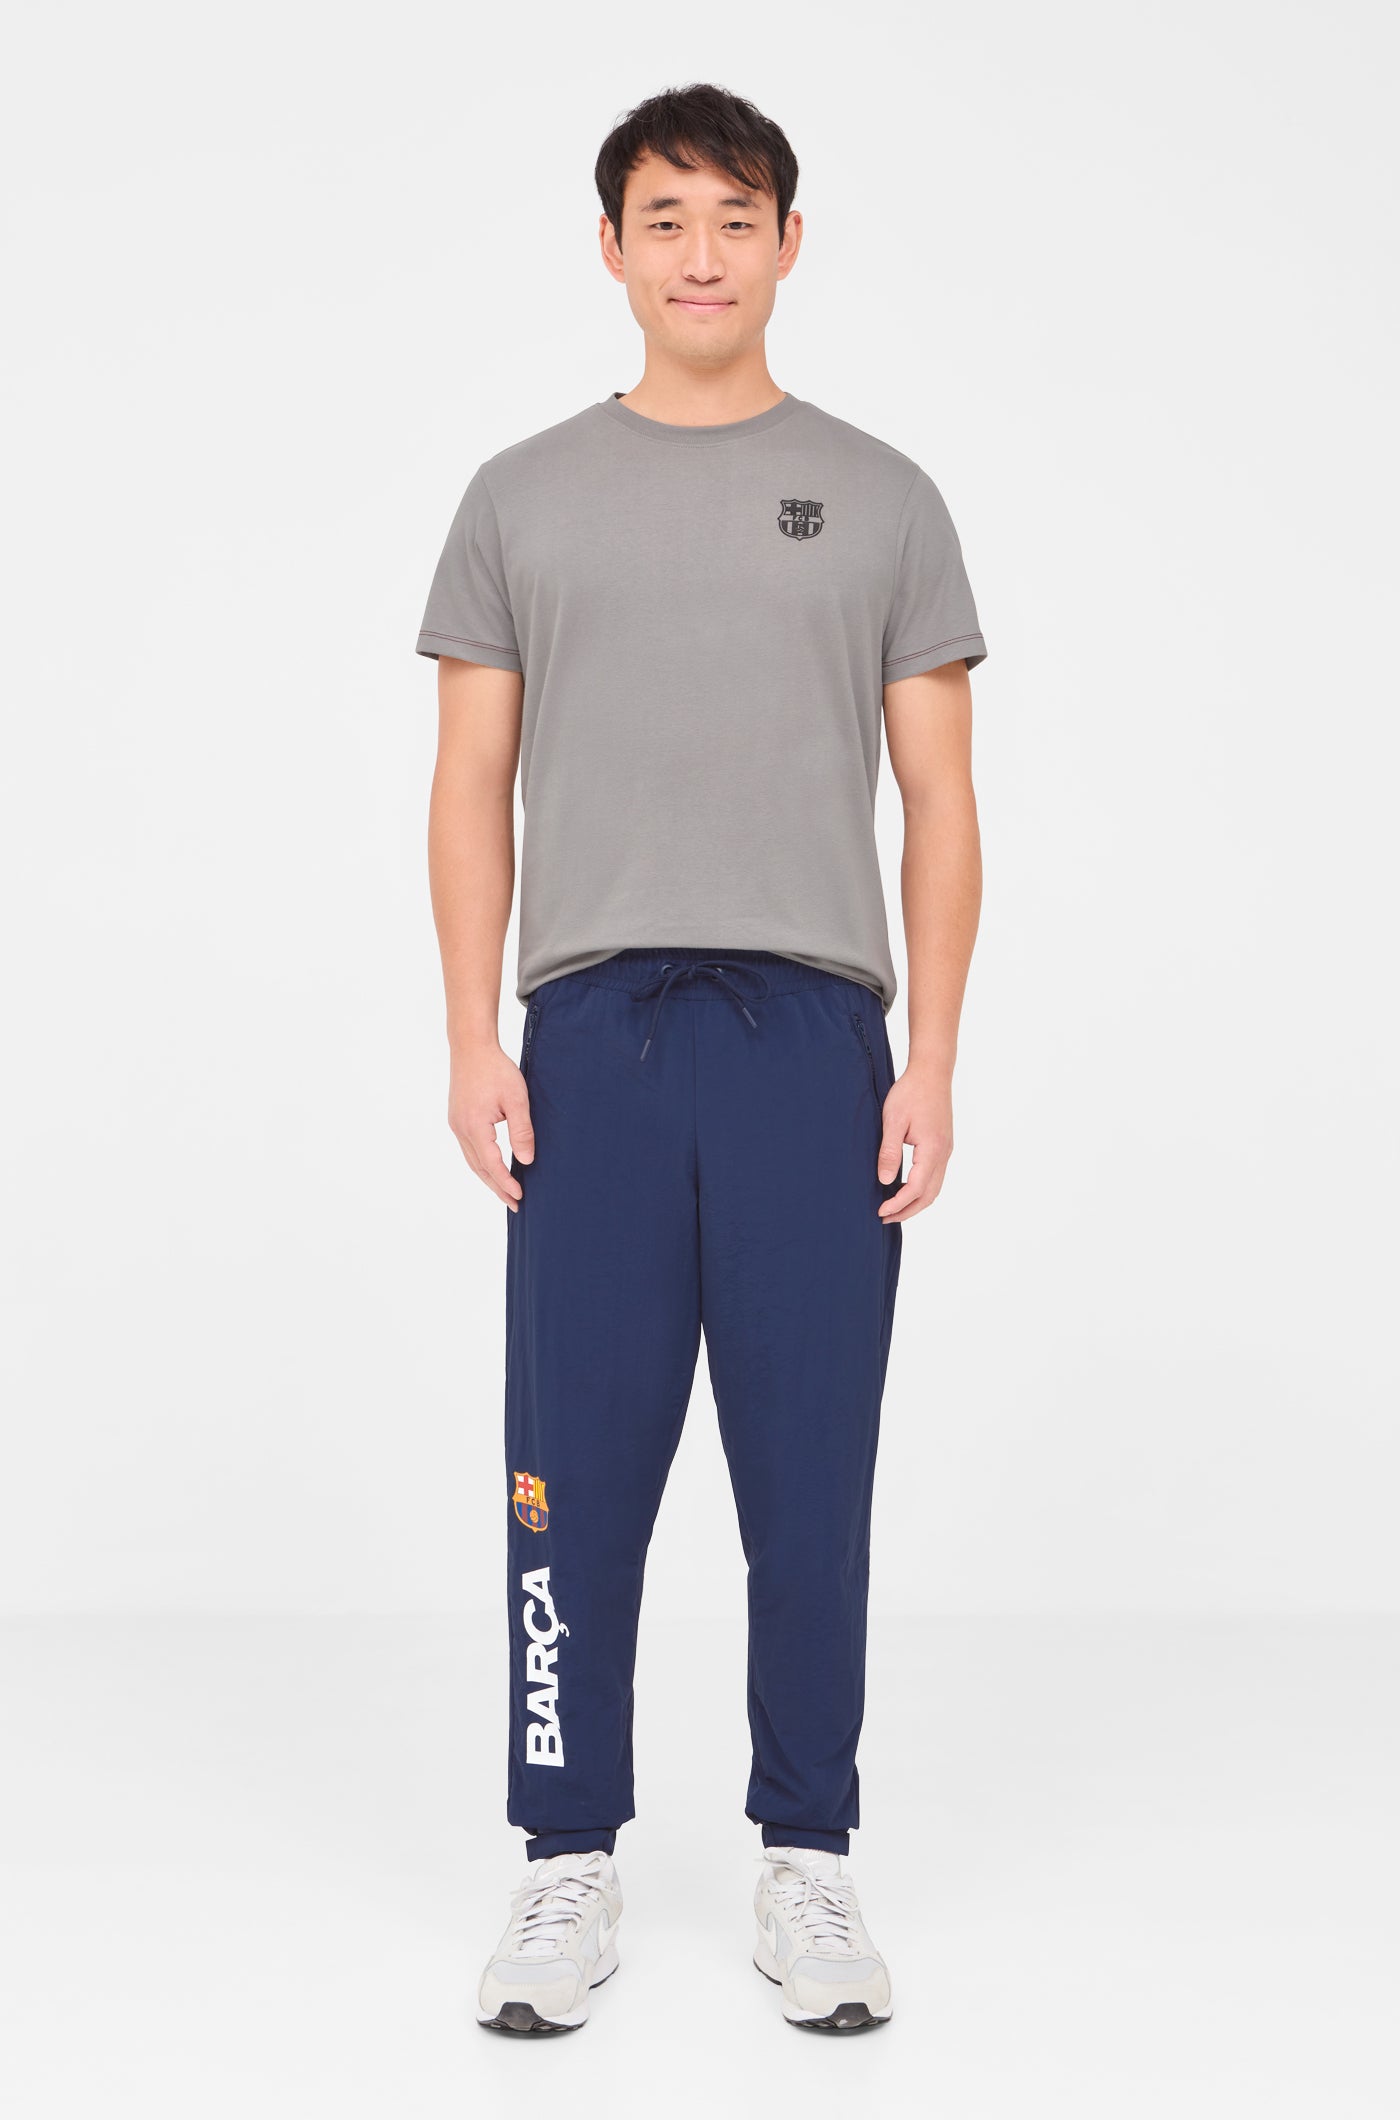 Vintage Barça sports trousers.